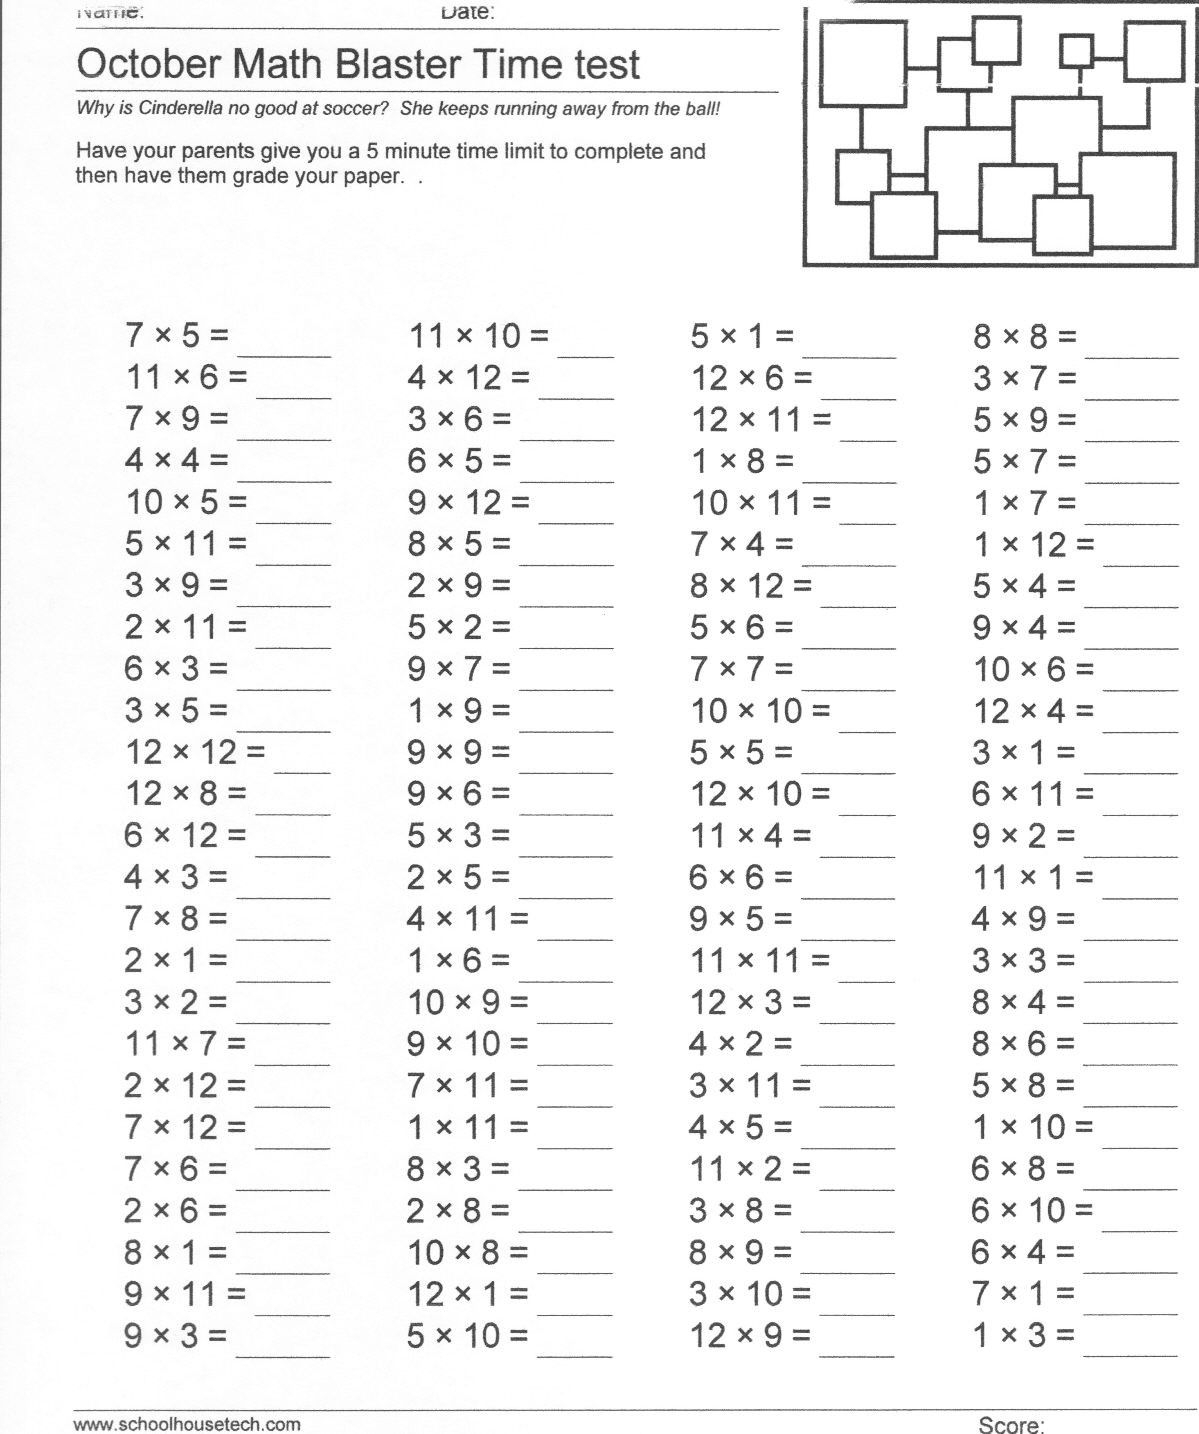 Free Printable 2 s Multiplication Worksheets PrintableMultiplication